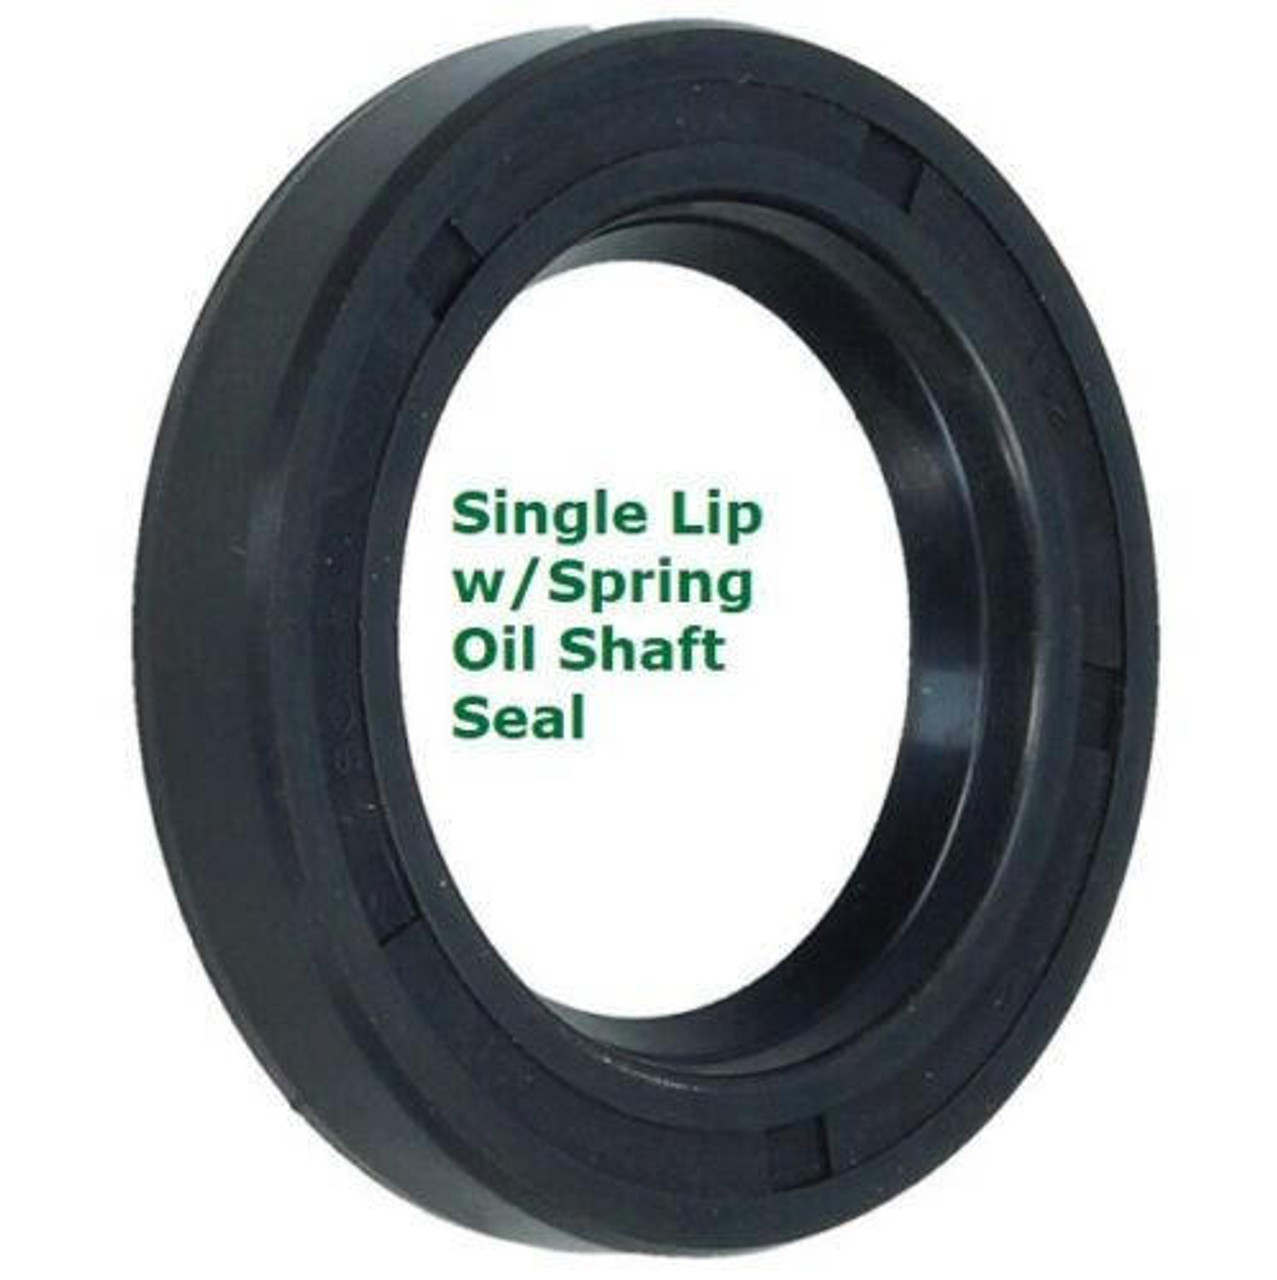 Metric Oil Shaft Seal 265 x 290 x 16mm   Single Lip   Price for 1 pc